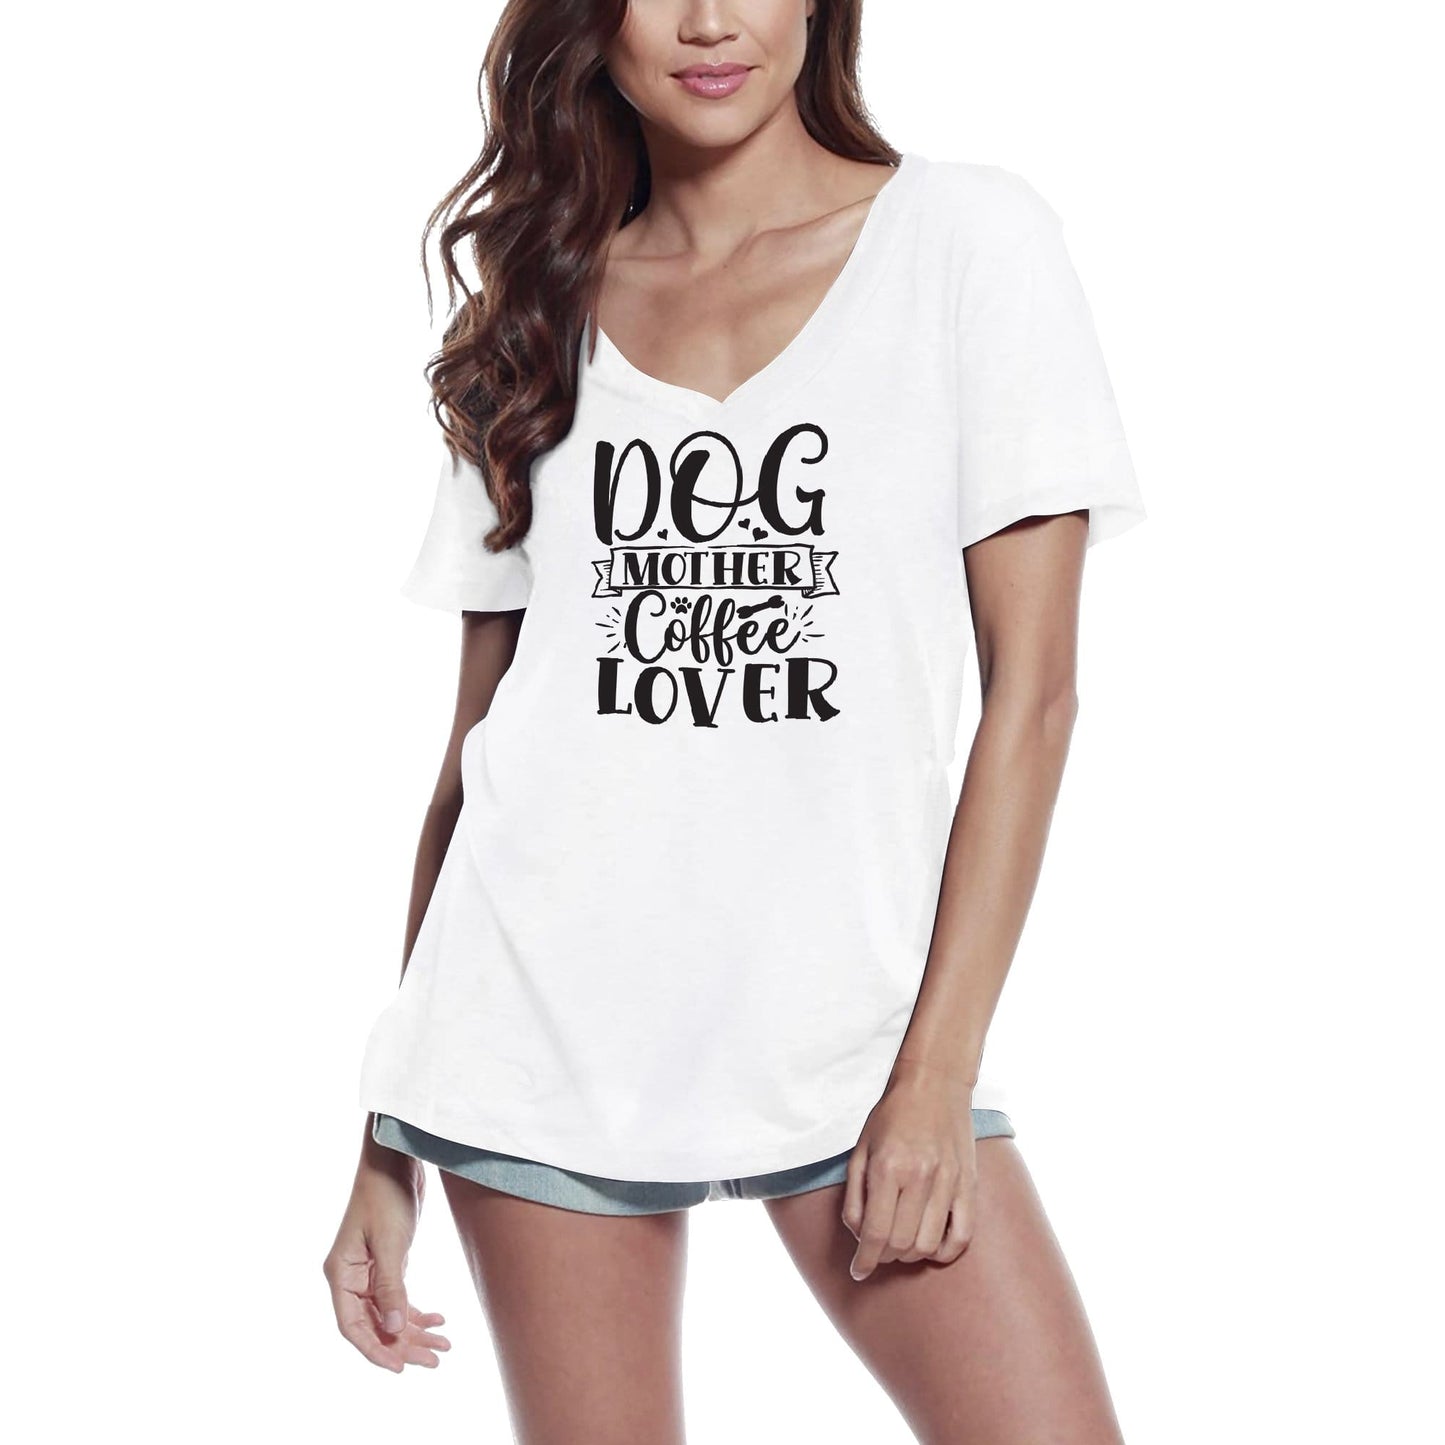 ULTRABASIC Women's T-Shirt Dog Mother Coffee Lover - Funny Vintage Short Sleeve Tee Shirt